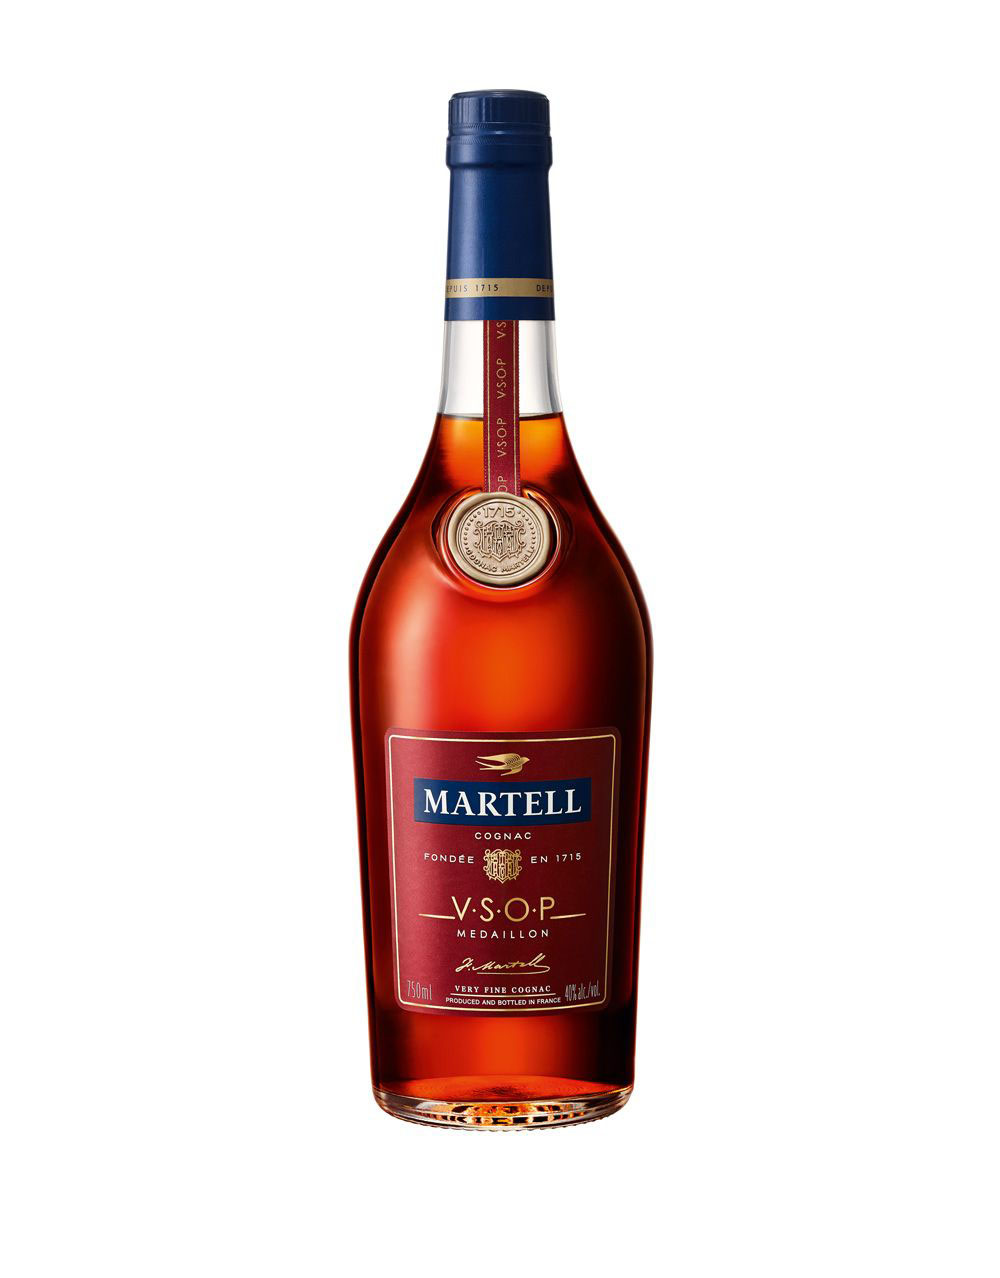 Hardy Legend 1863 Cognac